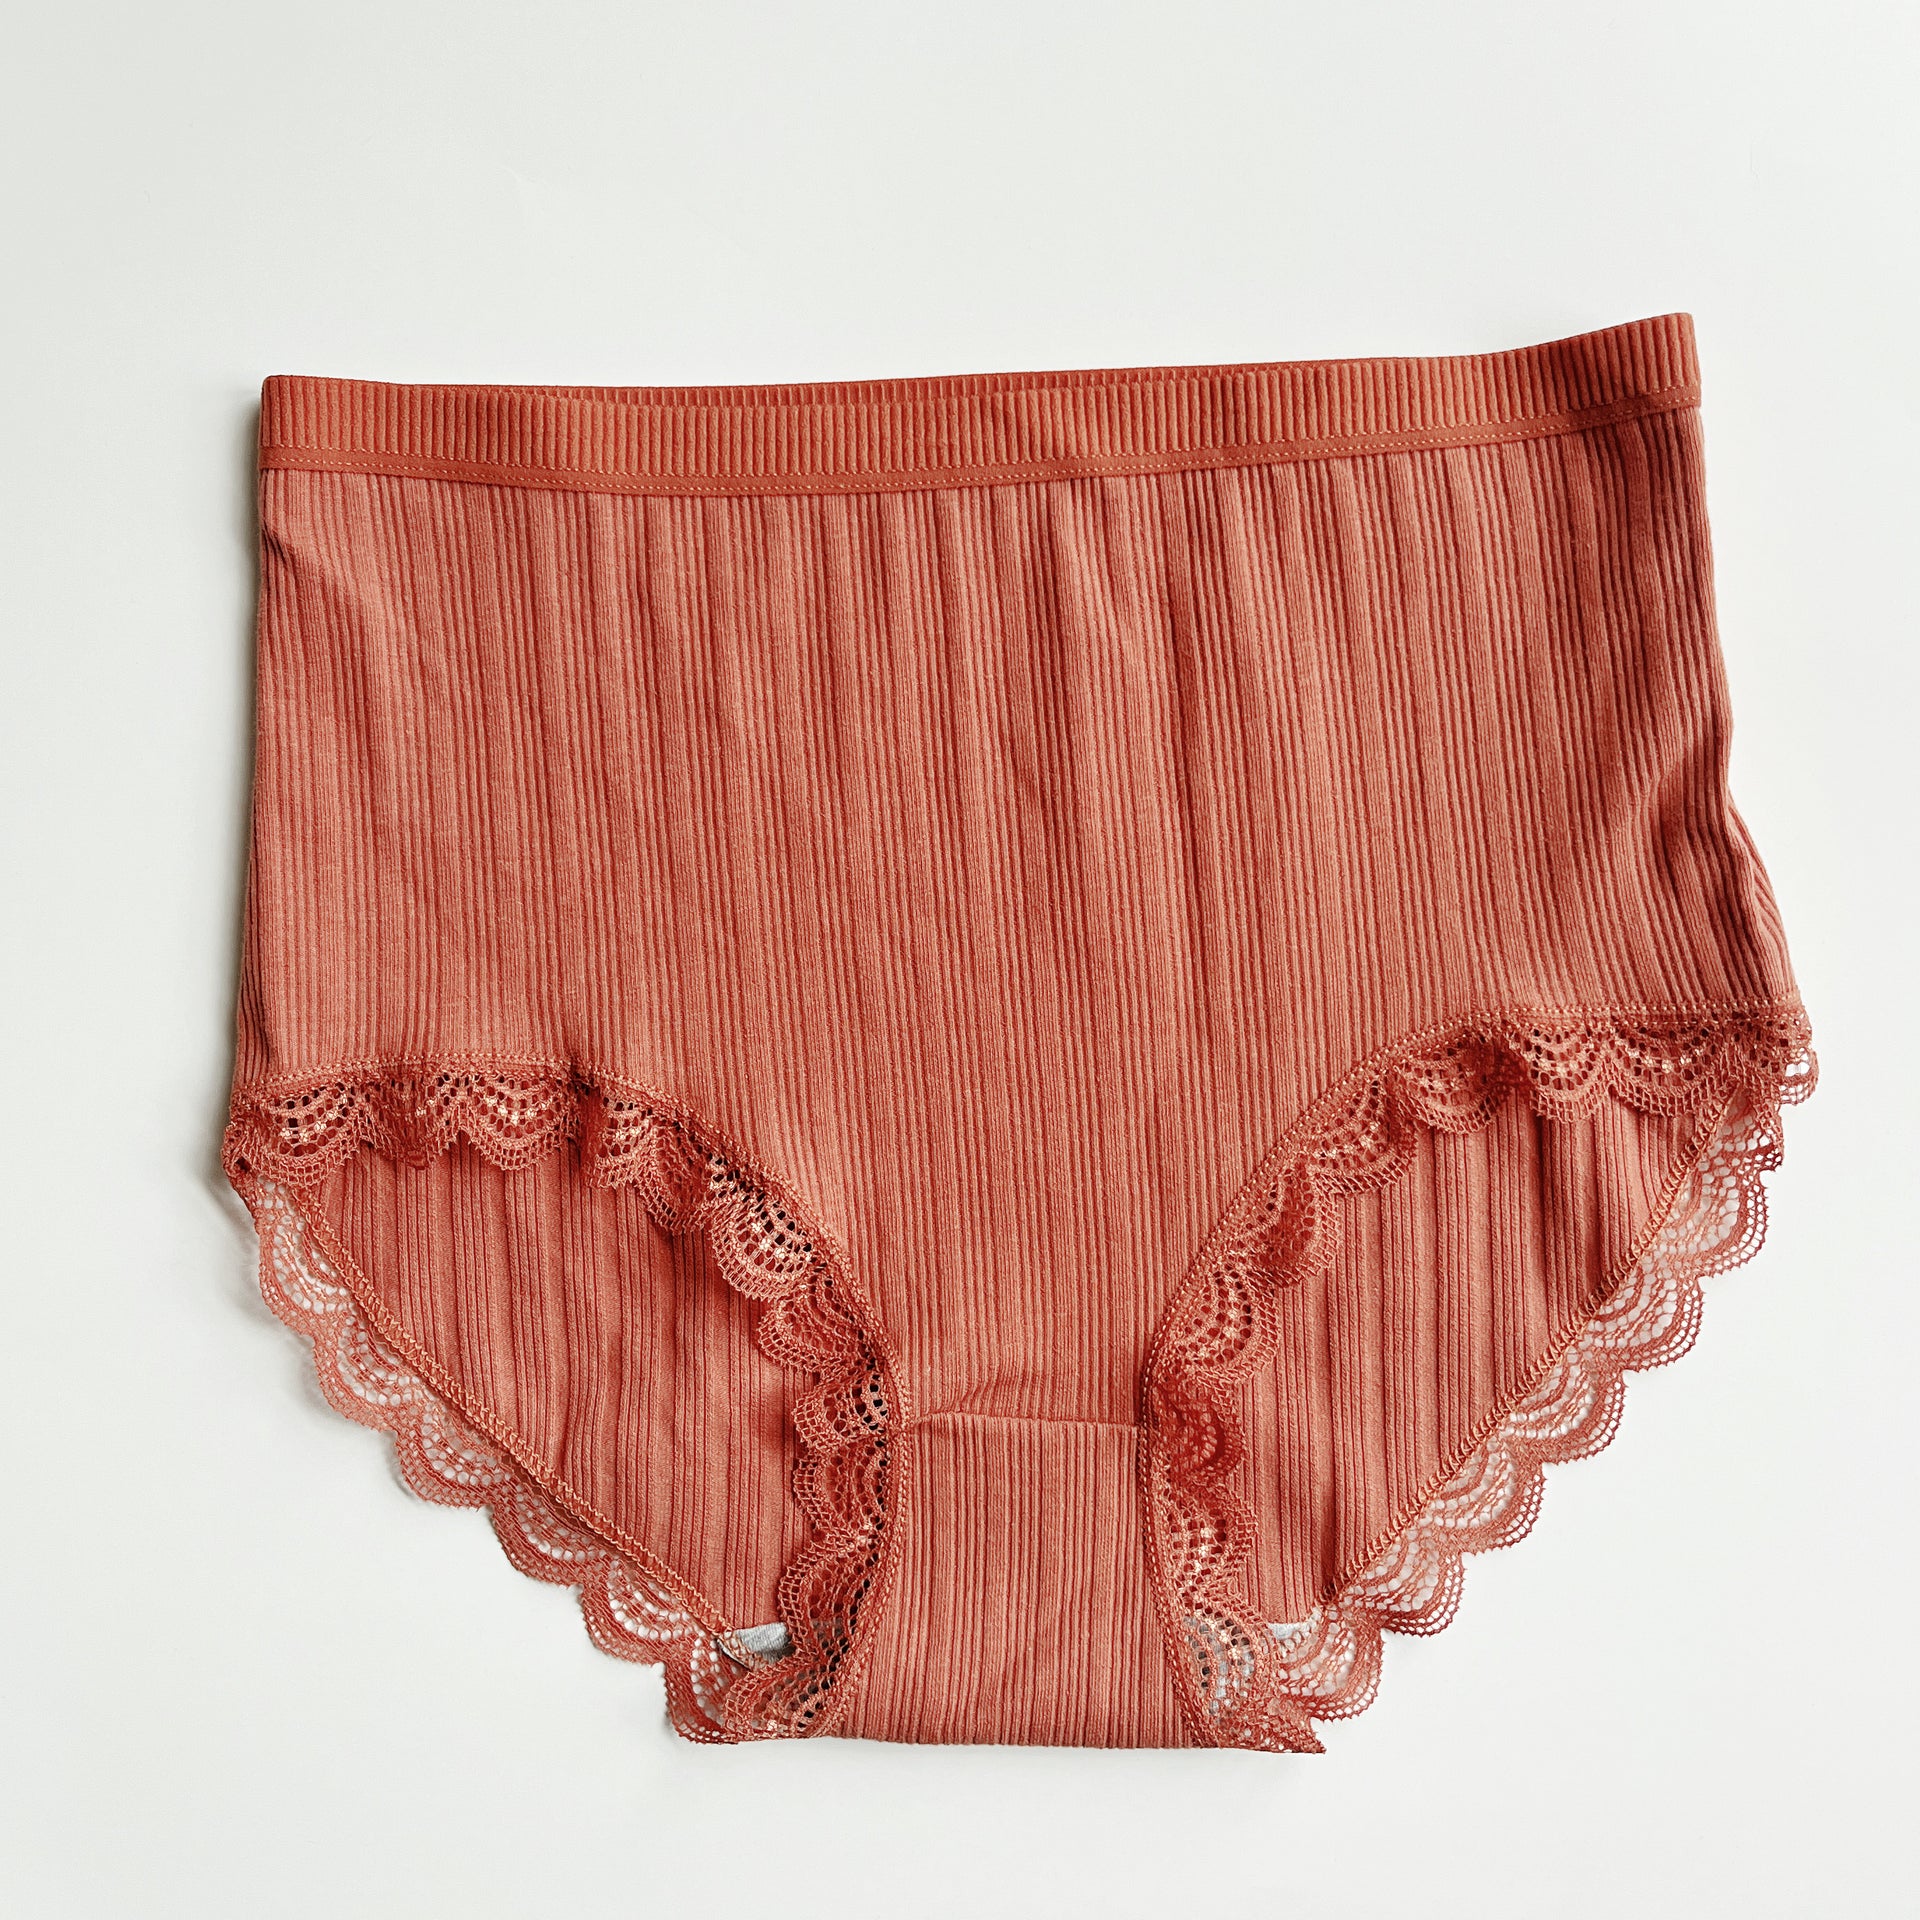 LBECLEY Open Gusset Panties Women Panties Lace Cutout Hollow Waist